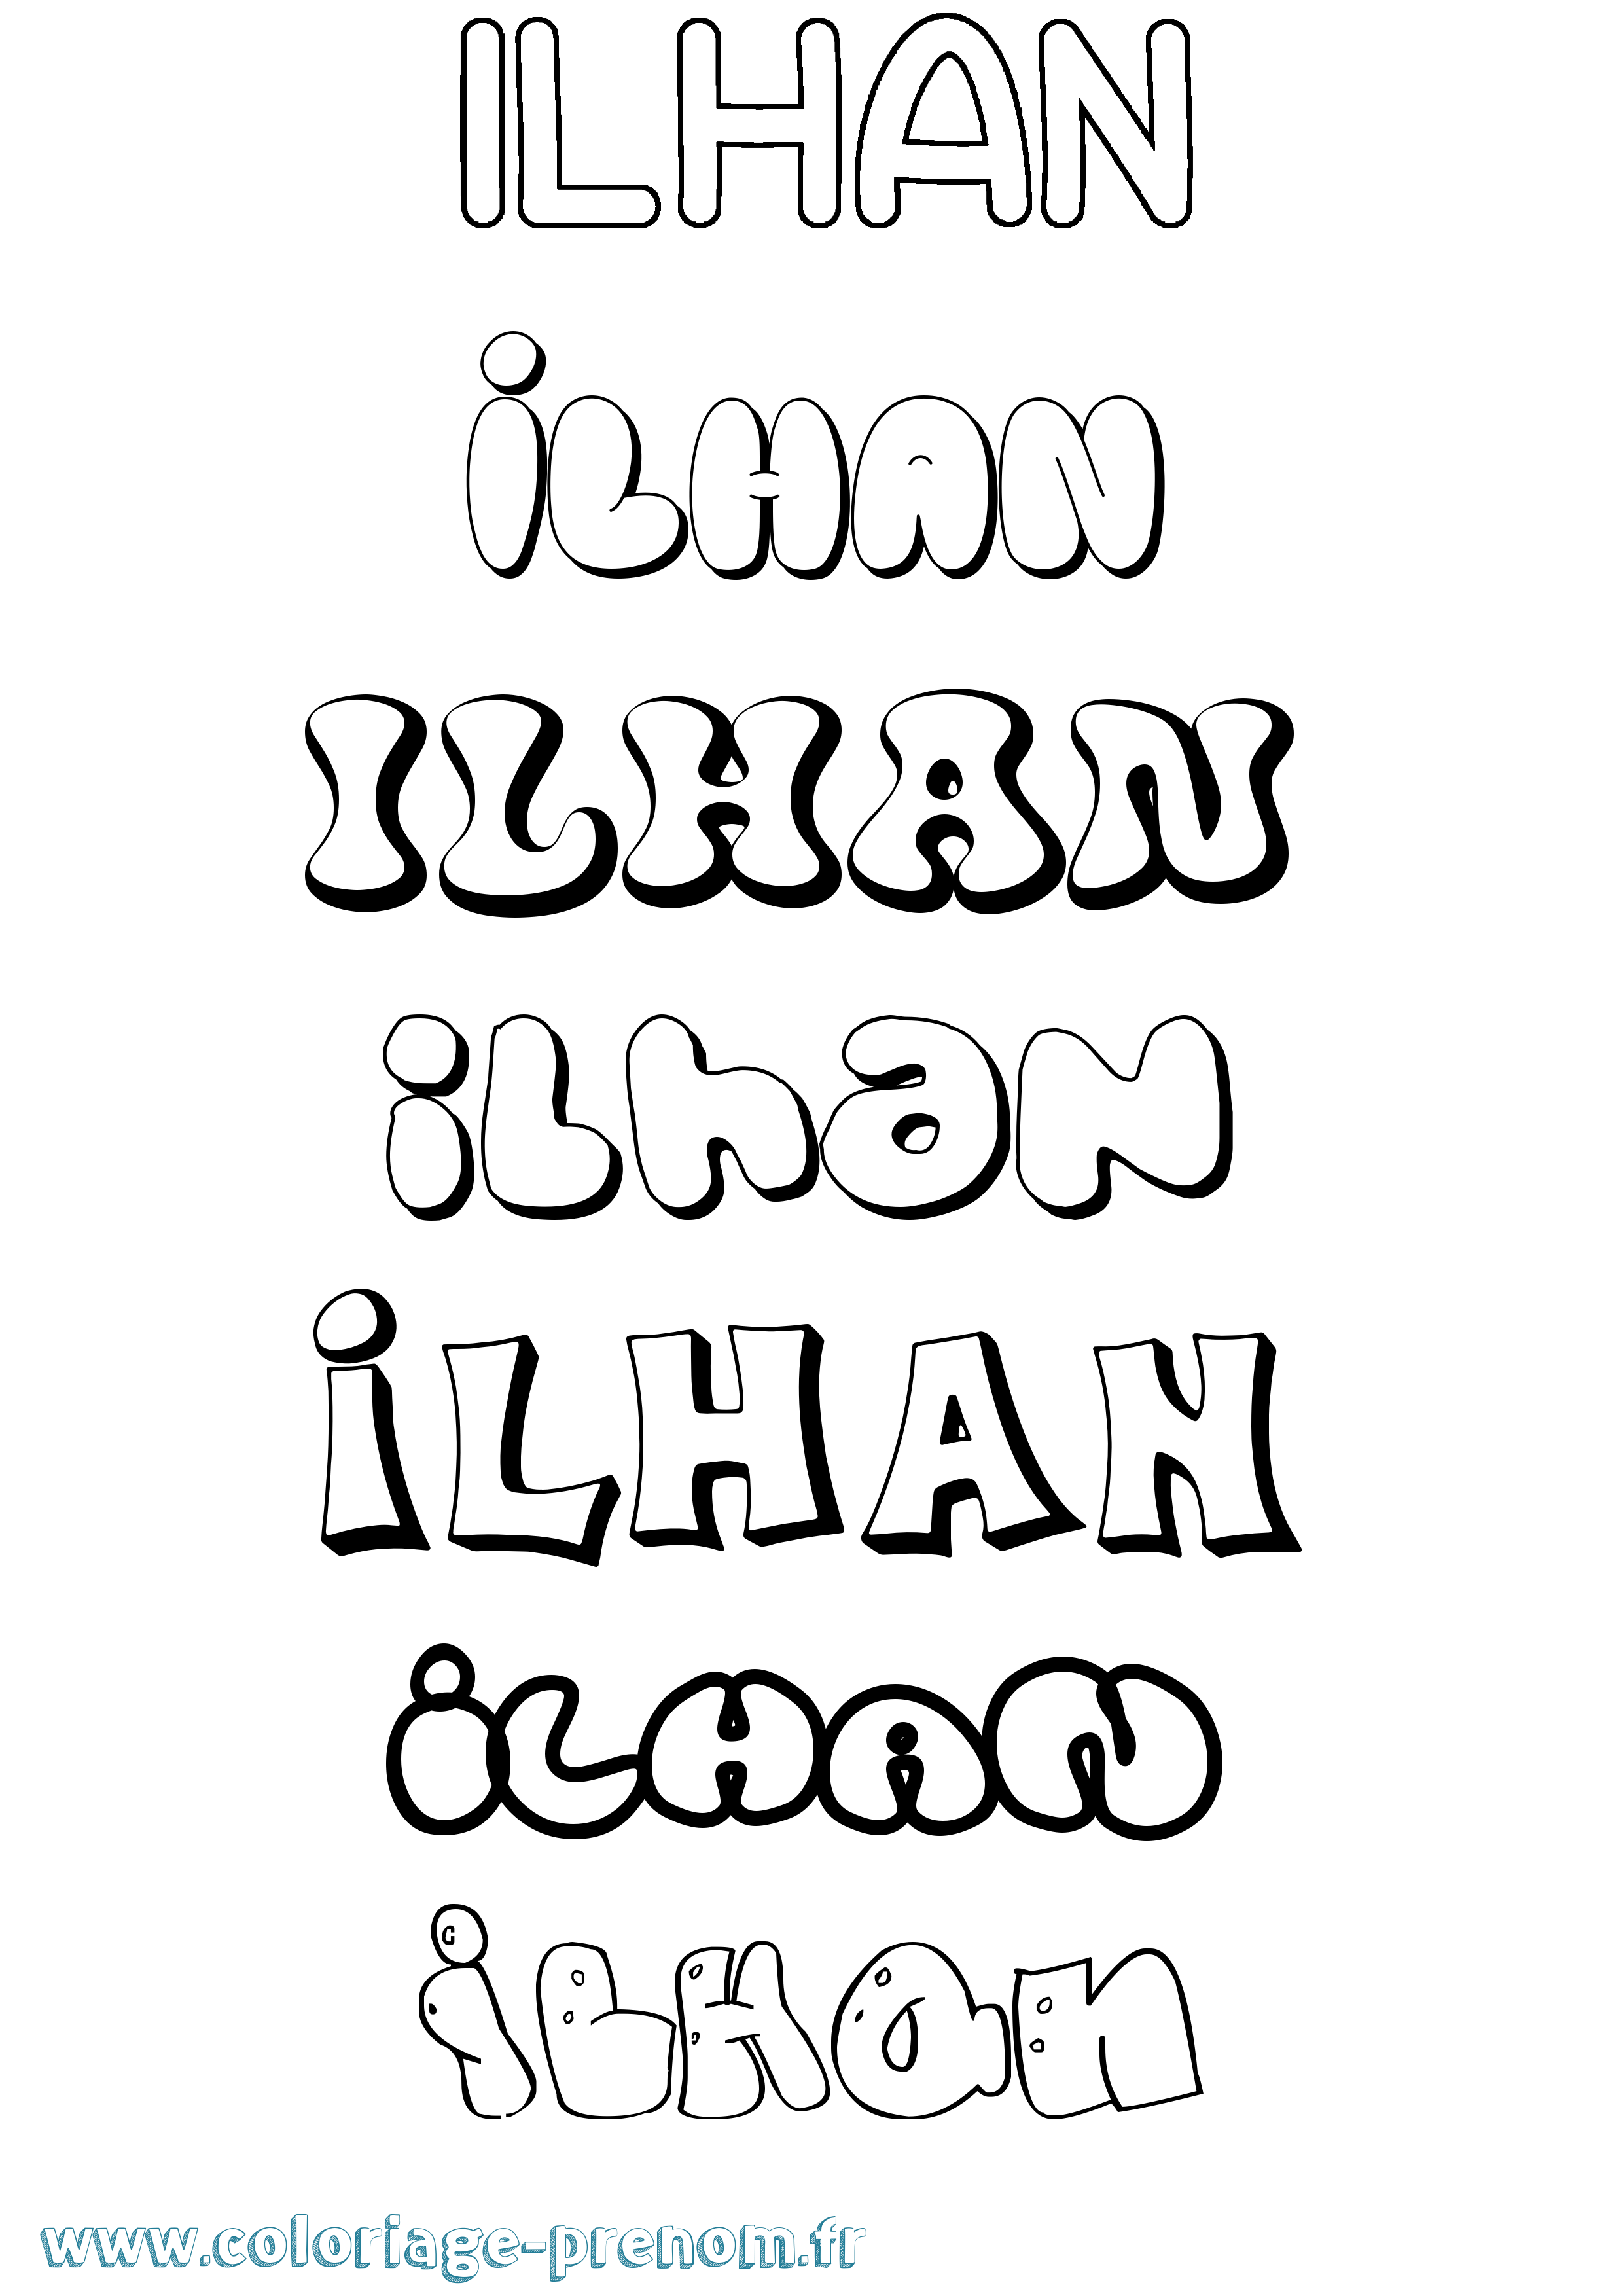 Coloriage prénom Ilhan